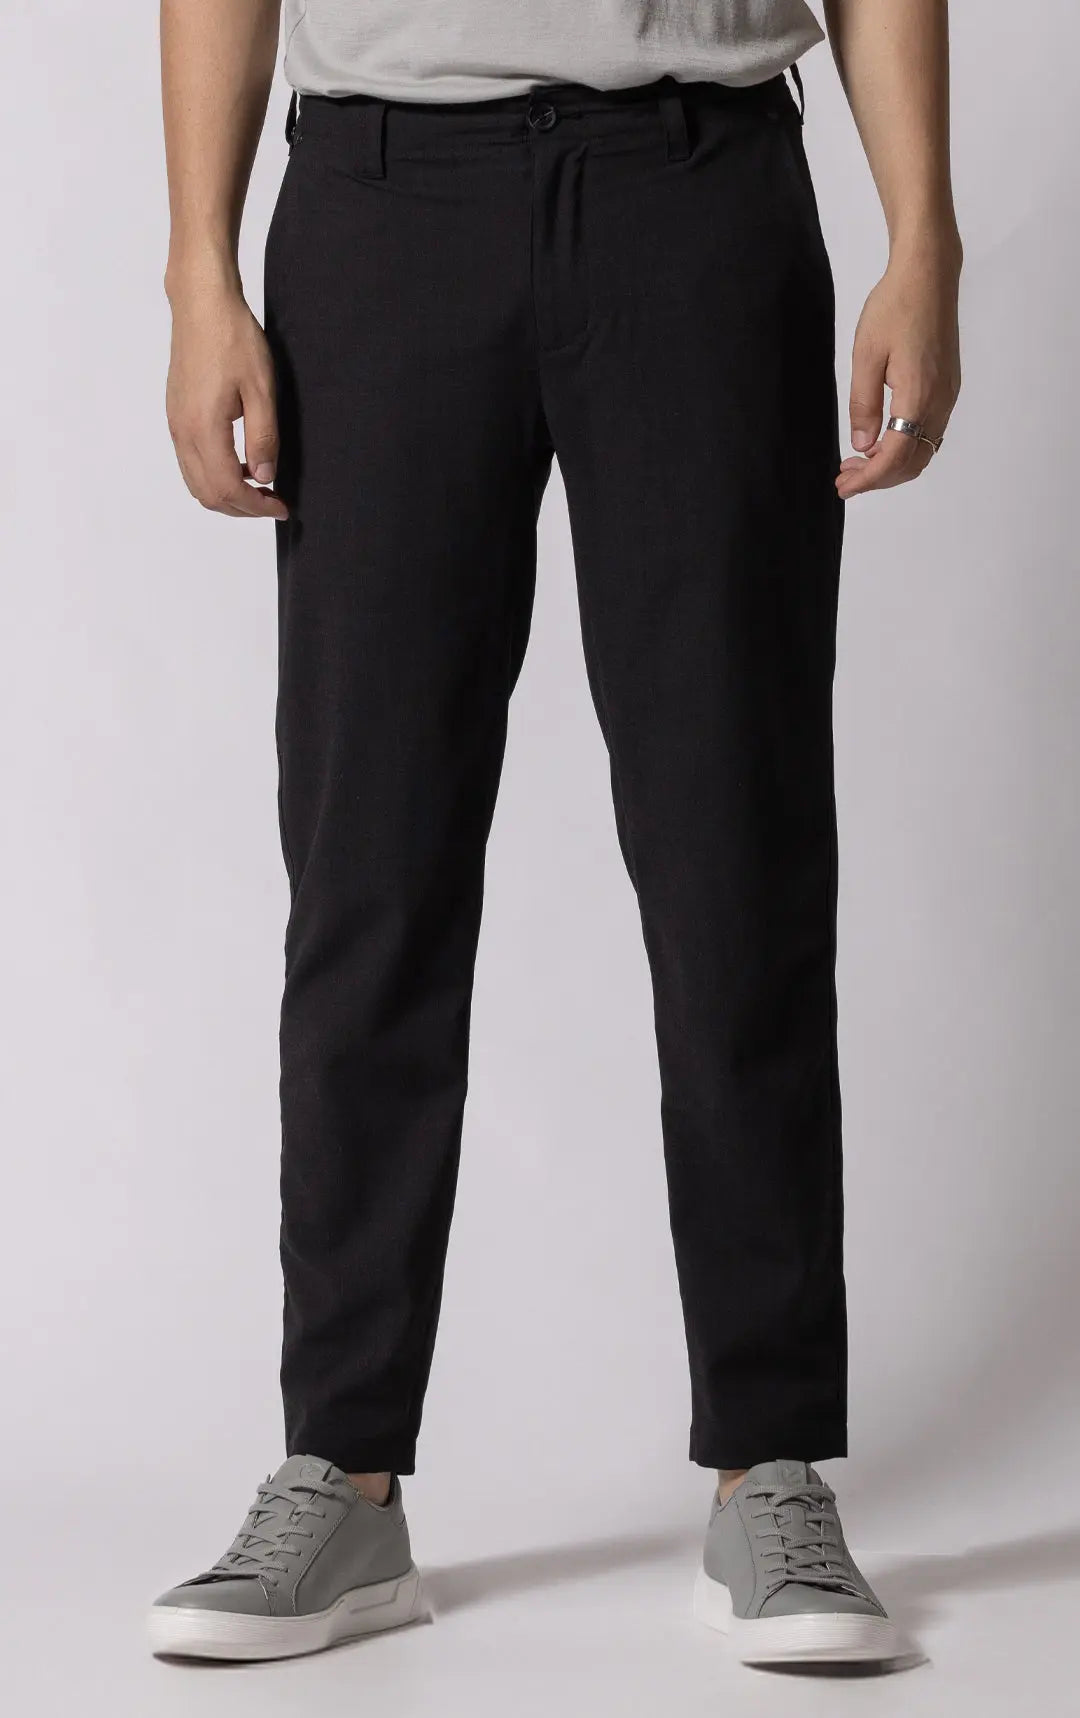 Jade Black Wool Rich Textured Premium Wool Blend Pant For Men